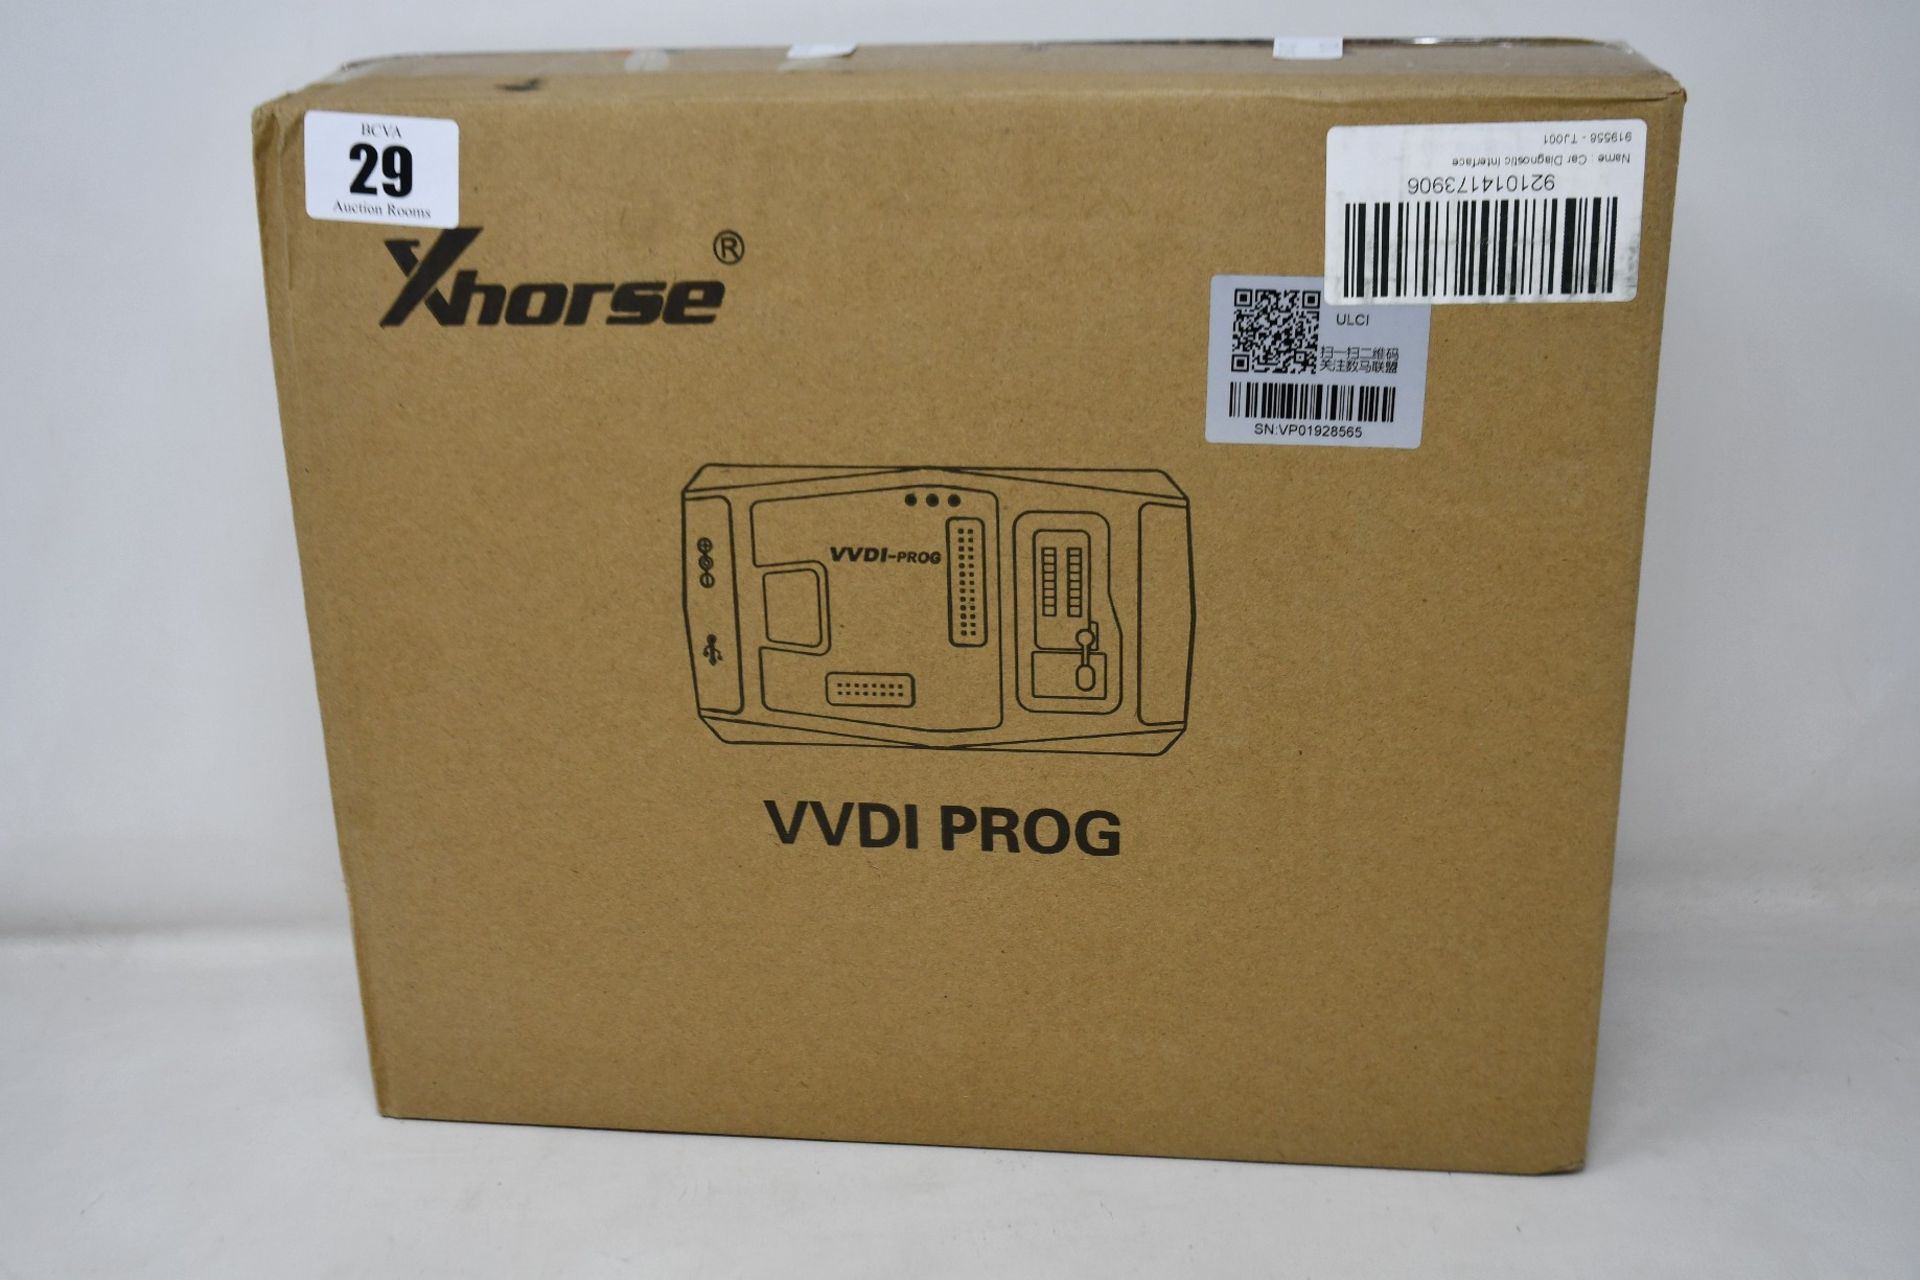 A boxed as new Xhorse VVDI PROG programmer.